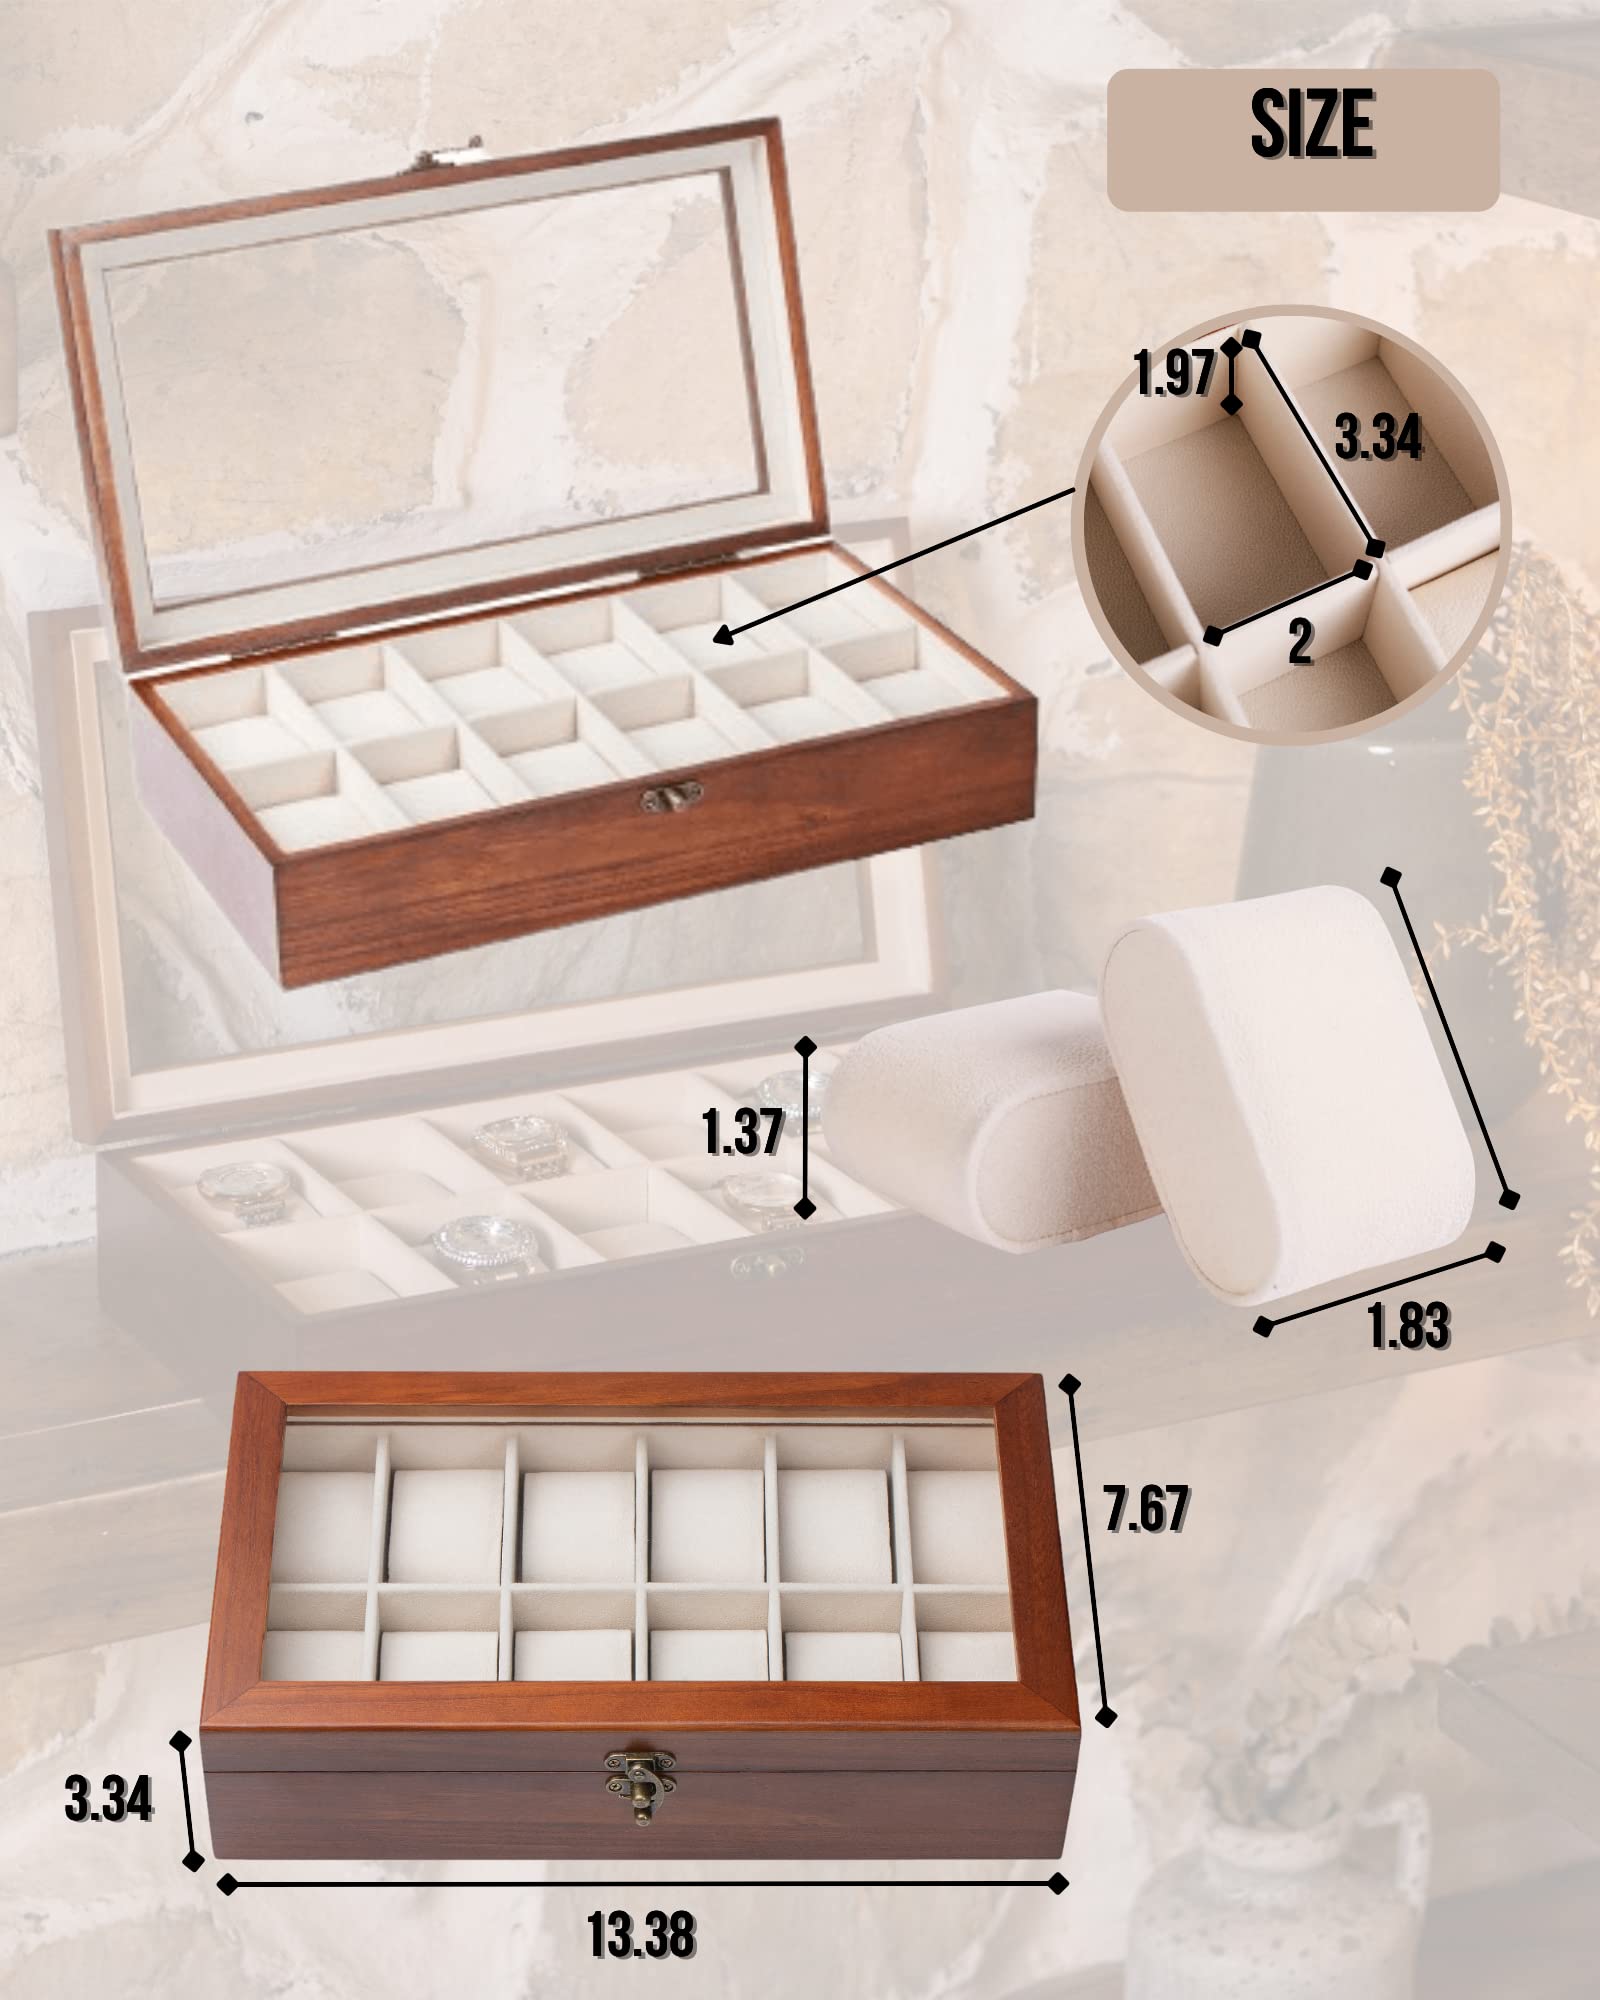 Exper City Watch Box Case Organizer Display Storage with Jewelry Drawer for Men Women Gift, Walnut Black 9B9G4T66 9B9LPBV9